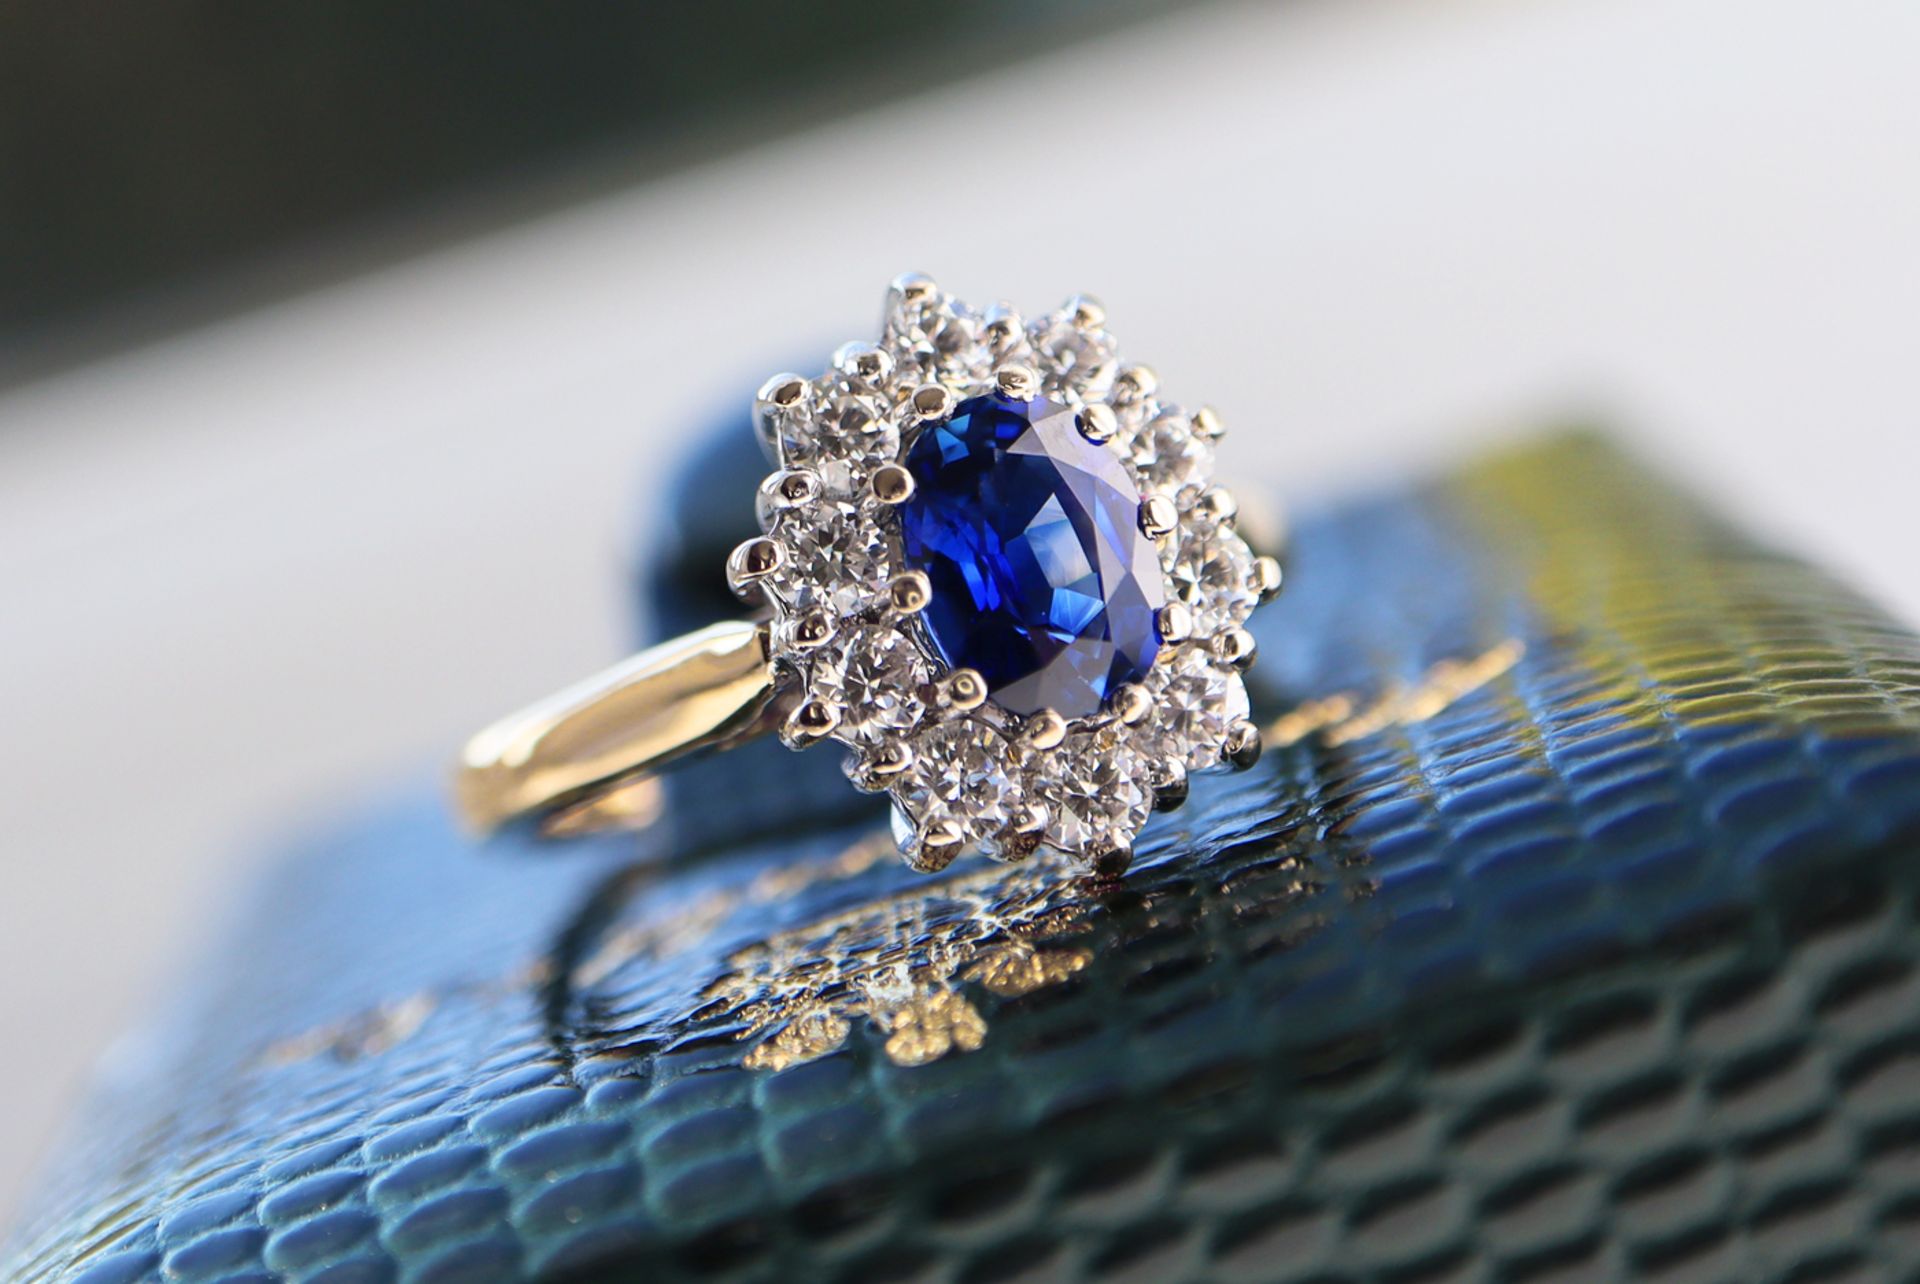 18CT YELLOW GOLD 1.38CT STUNNING ROYAL BLUE SAPPHIRE & DIAMOND HALO RING - Image 3 of 10